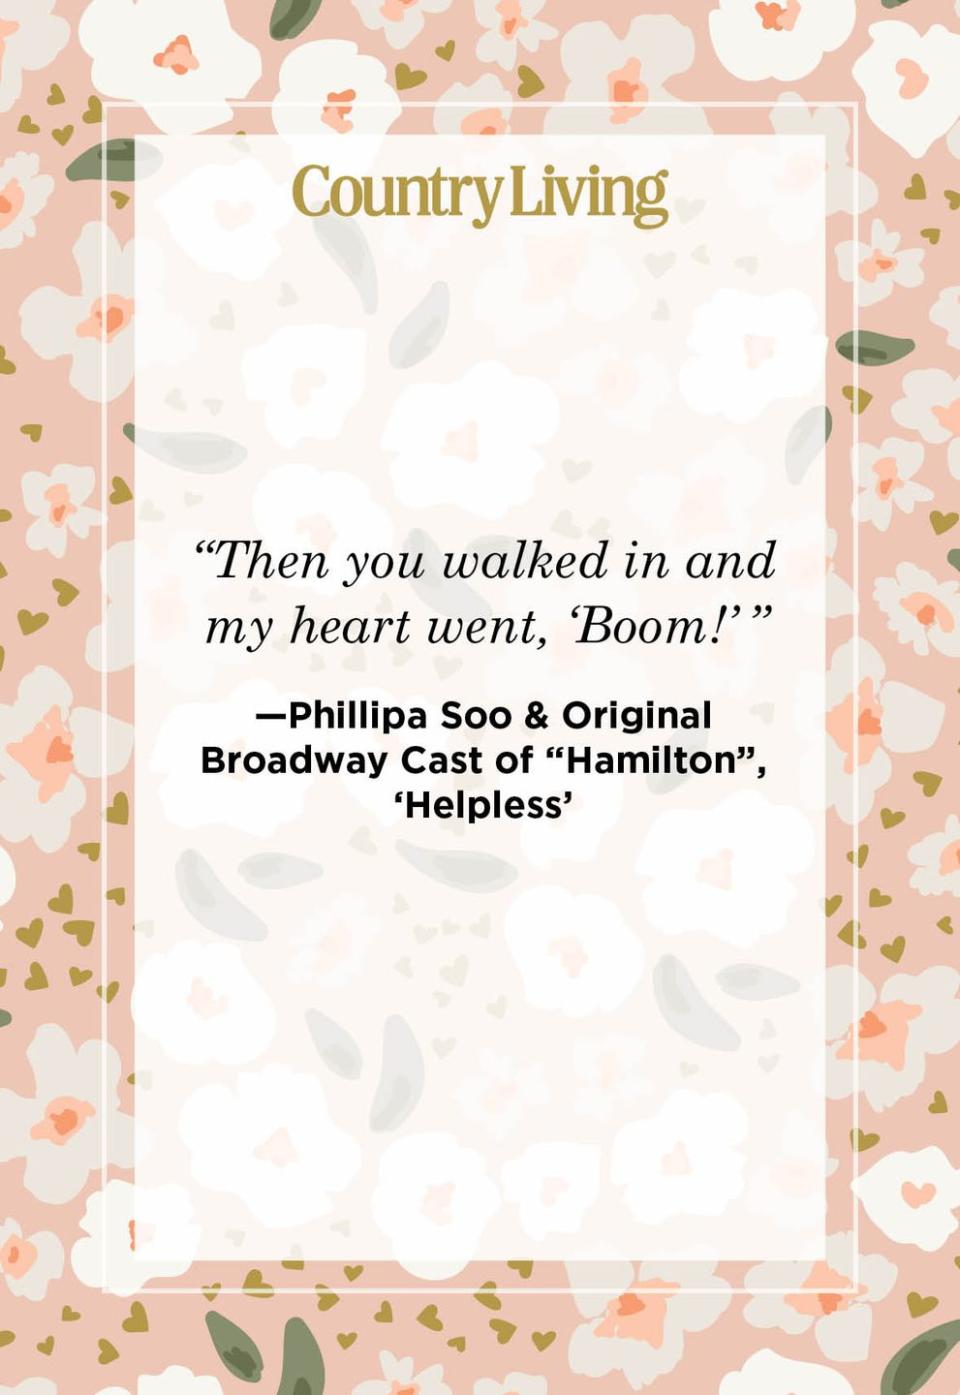 3) Phillipa Soo & Original Broadway Cast of "Hamilton," 'Helpless'